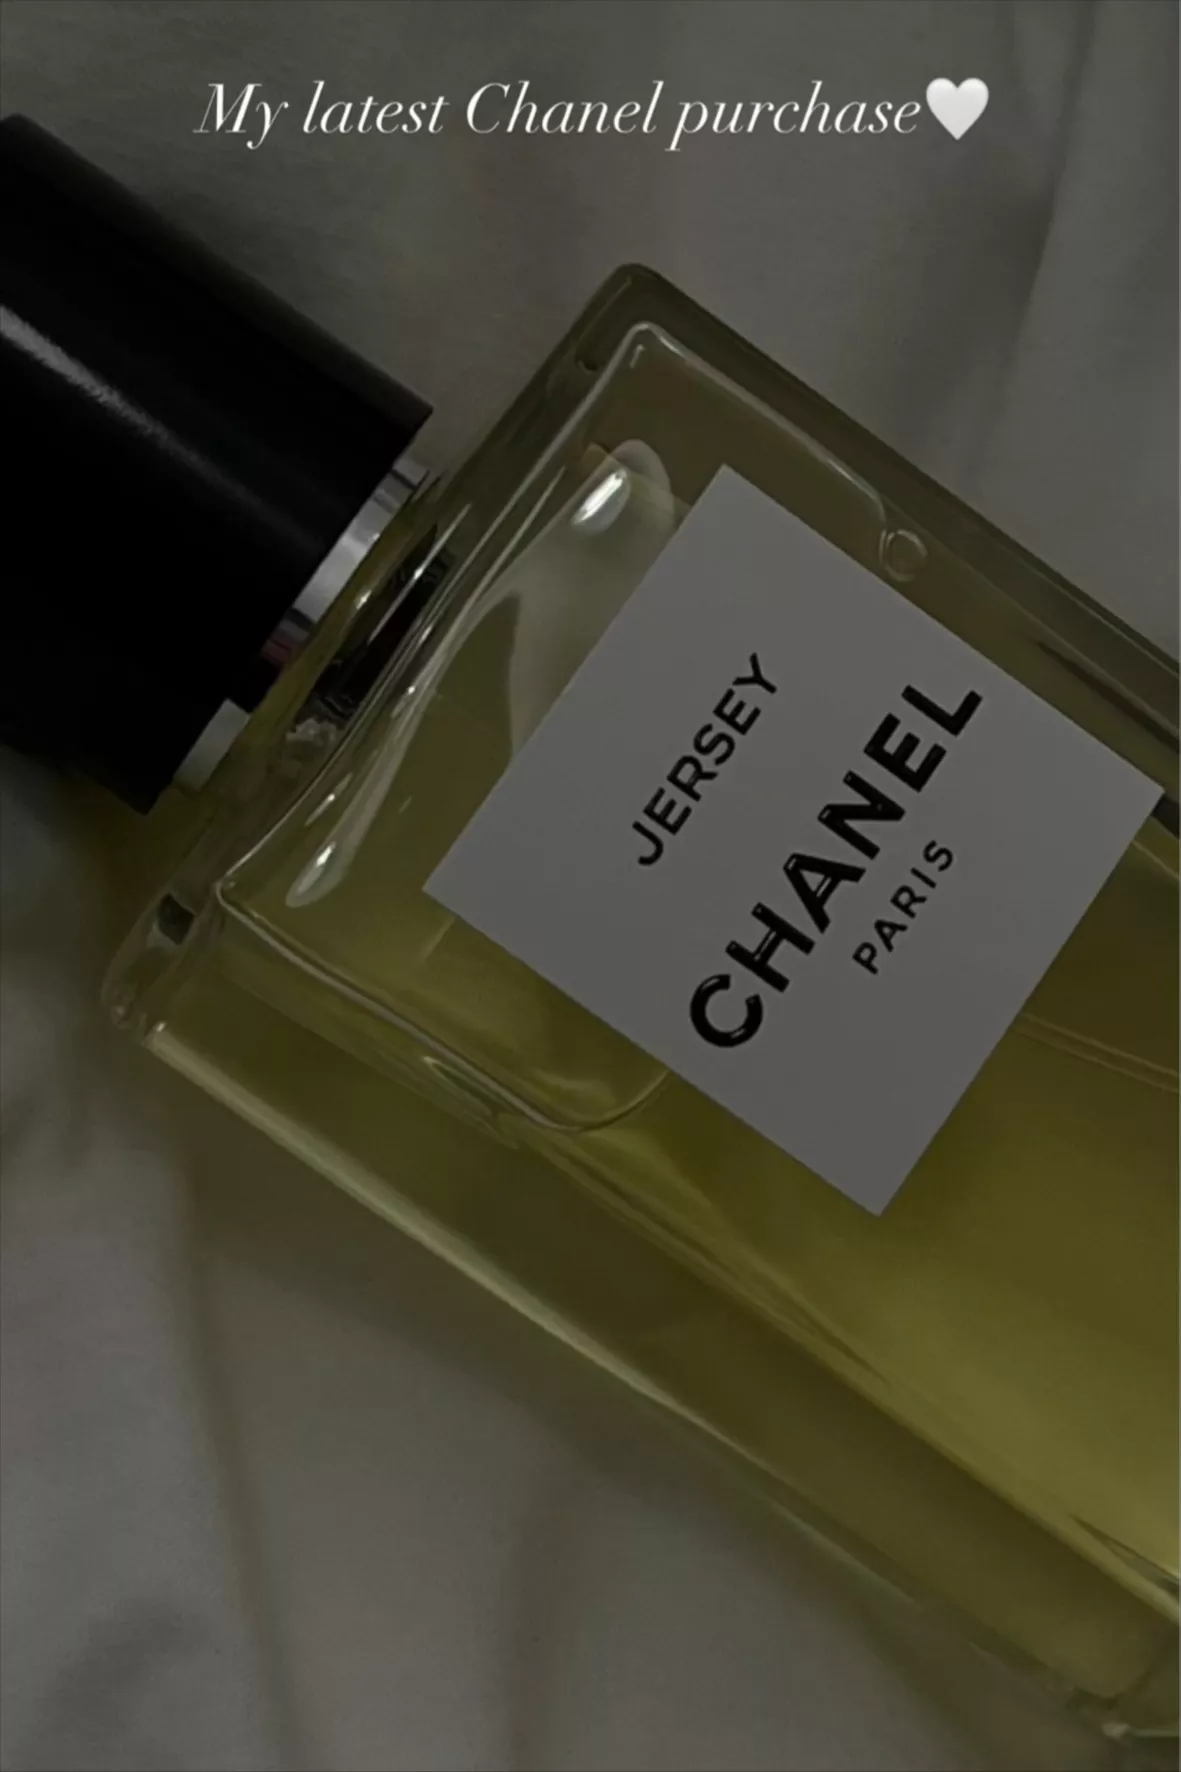 Jersey by Les Exclusifs de Chanel